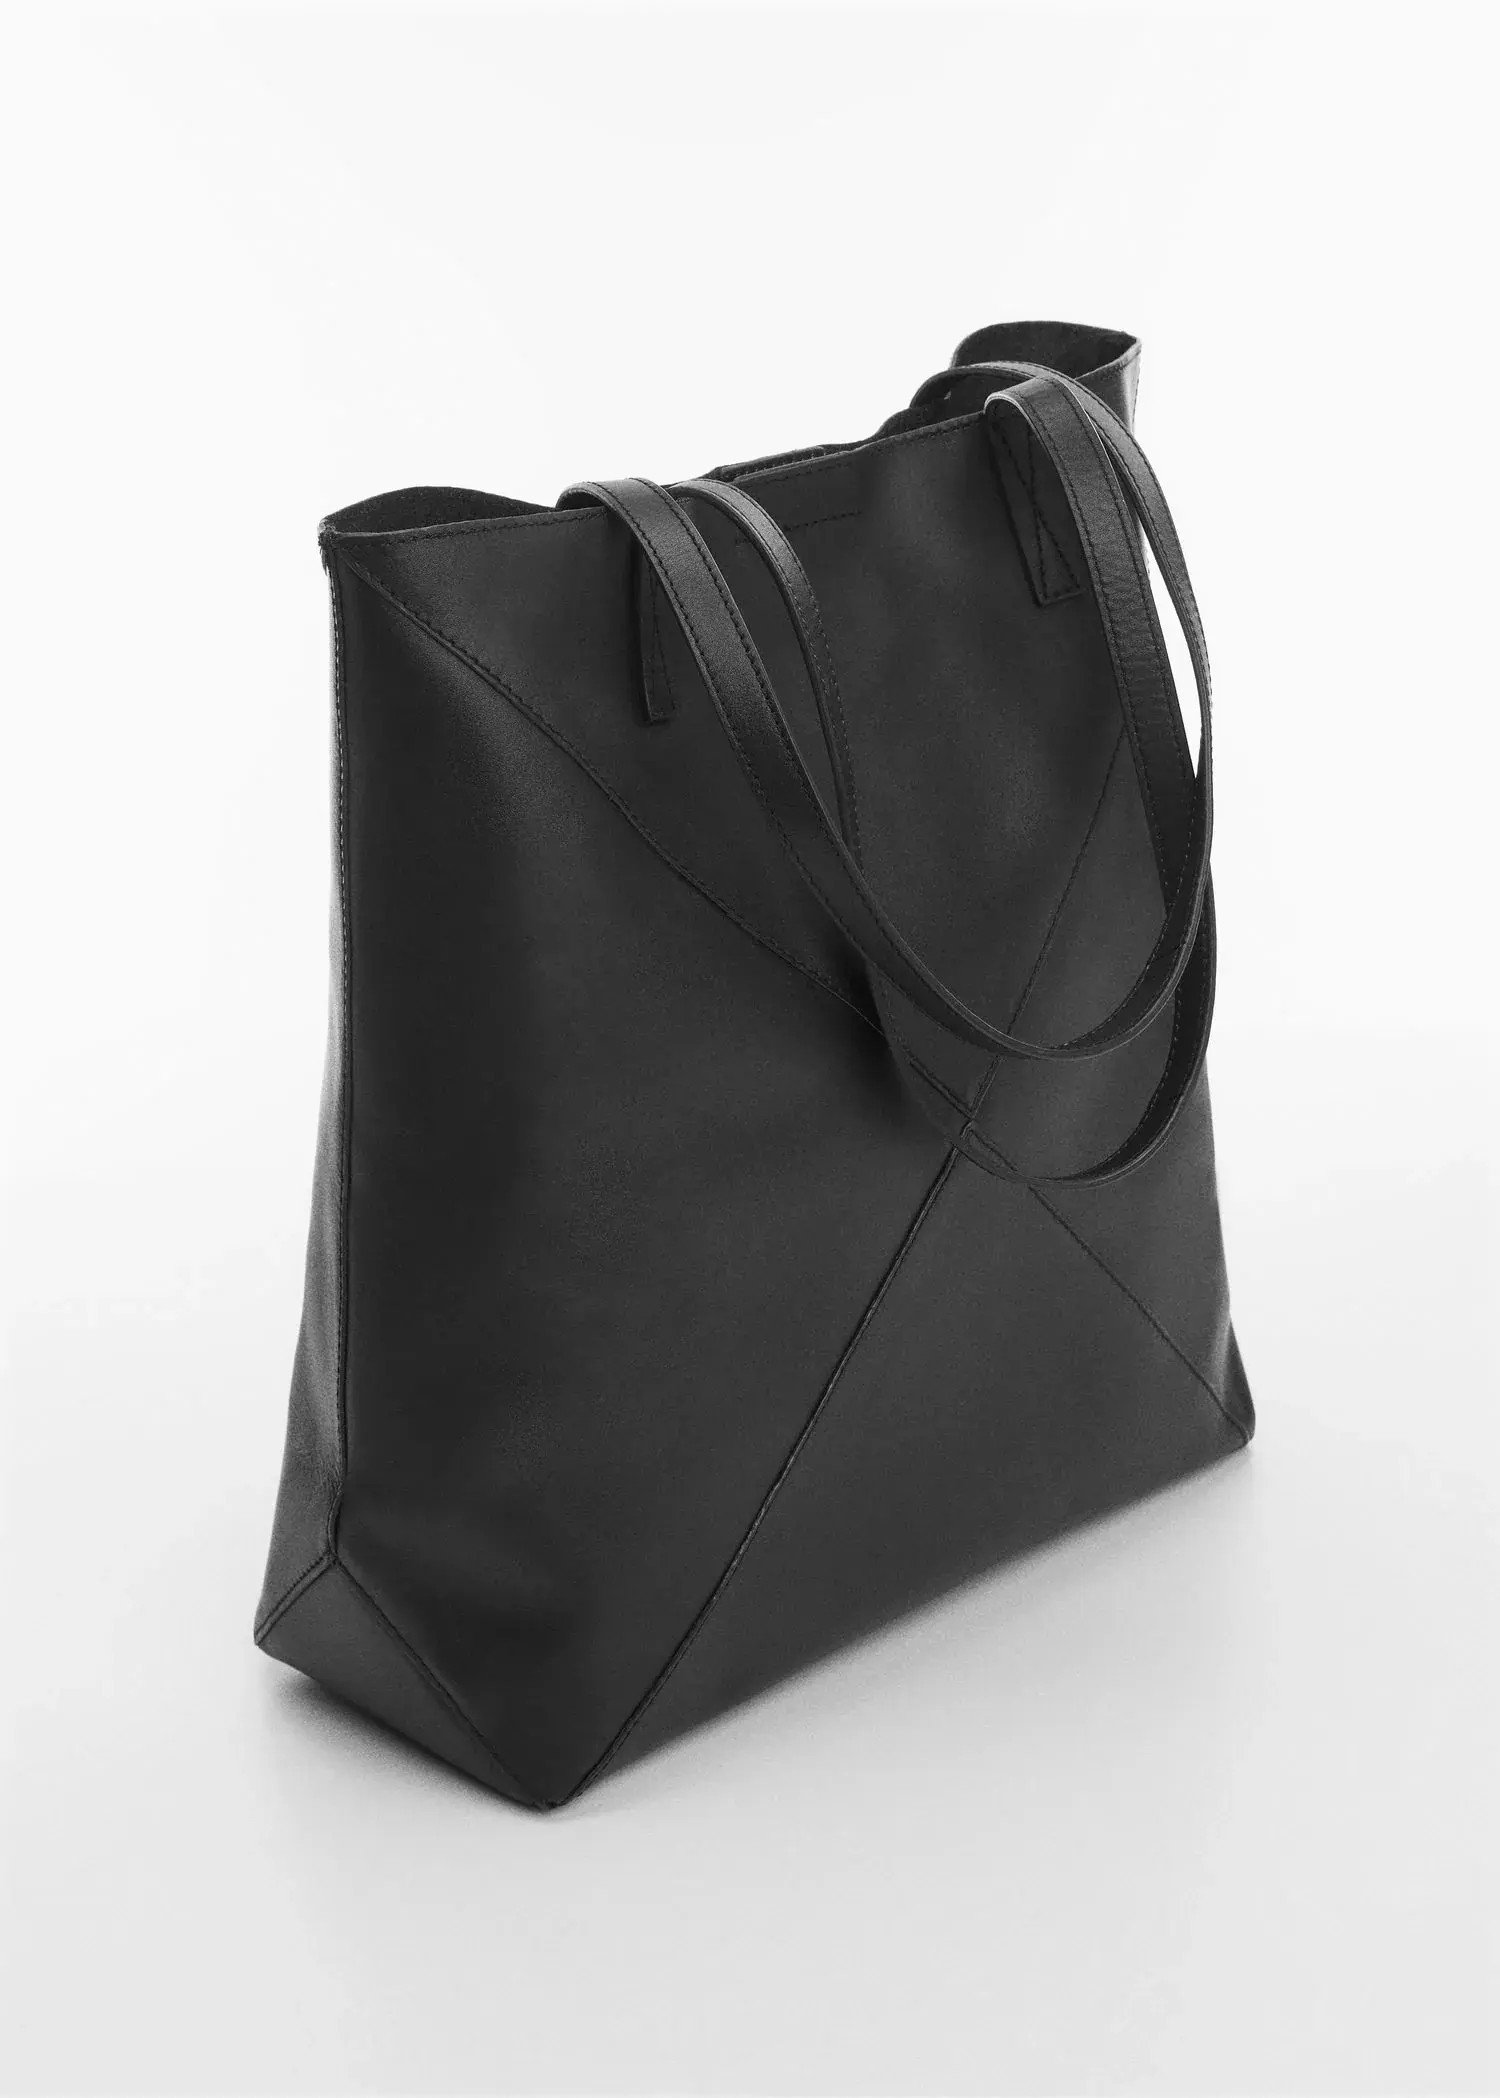 Mango Leather shopper bag. 2